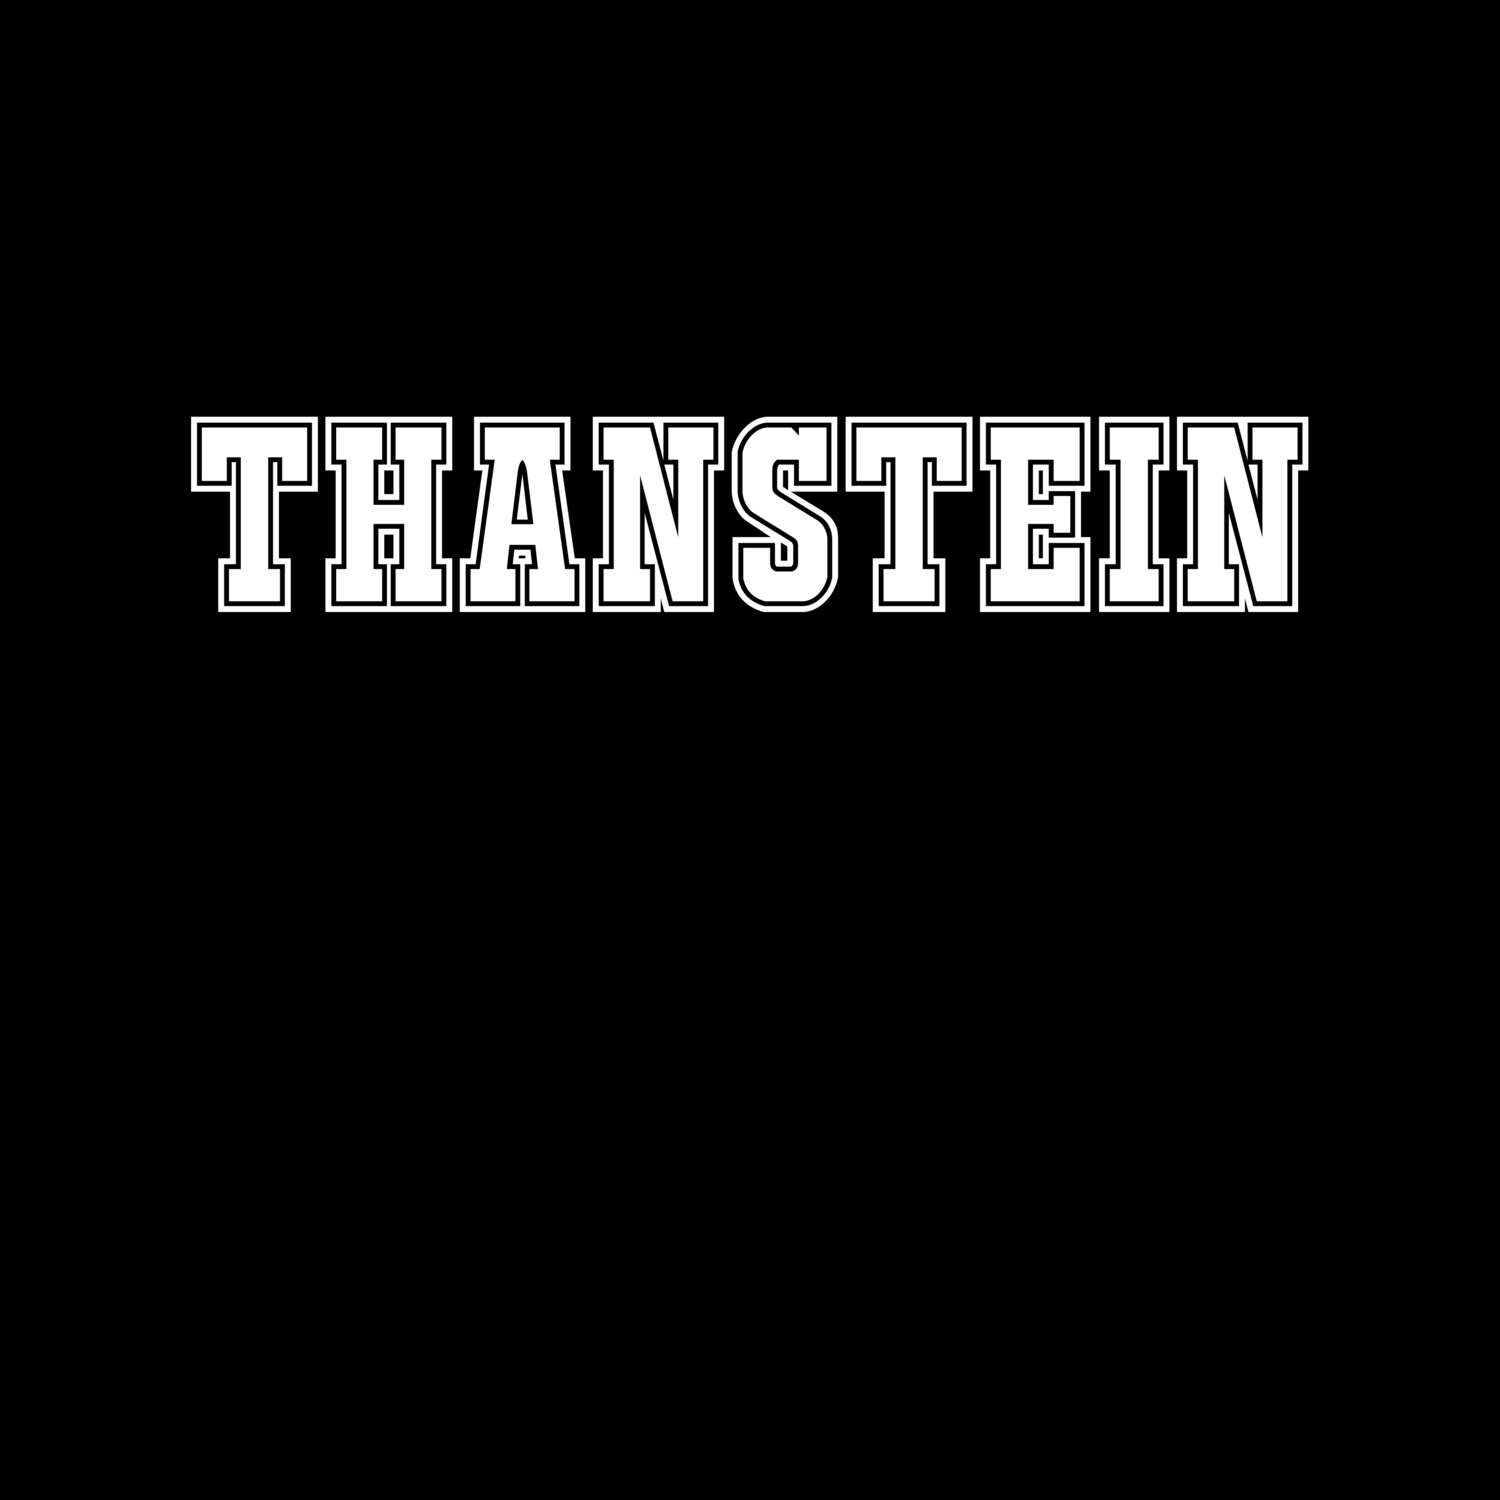 Thanstein T-Shirt »Classic«